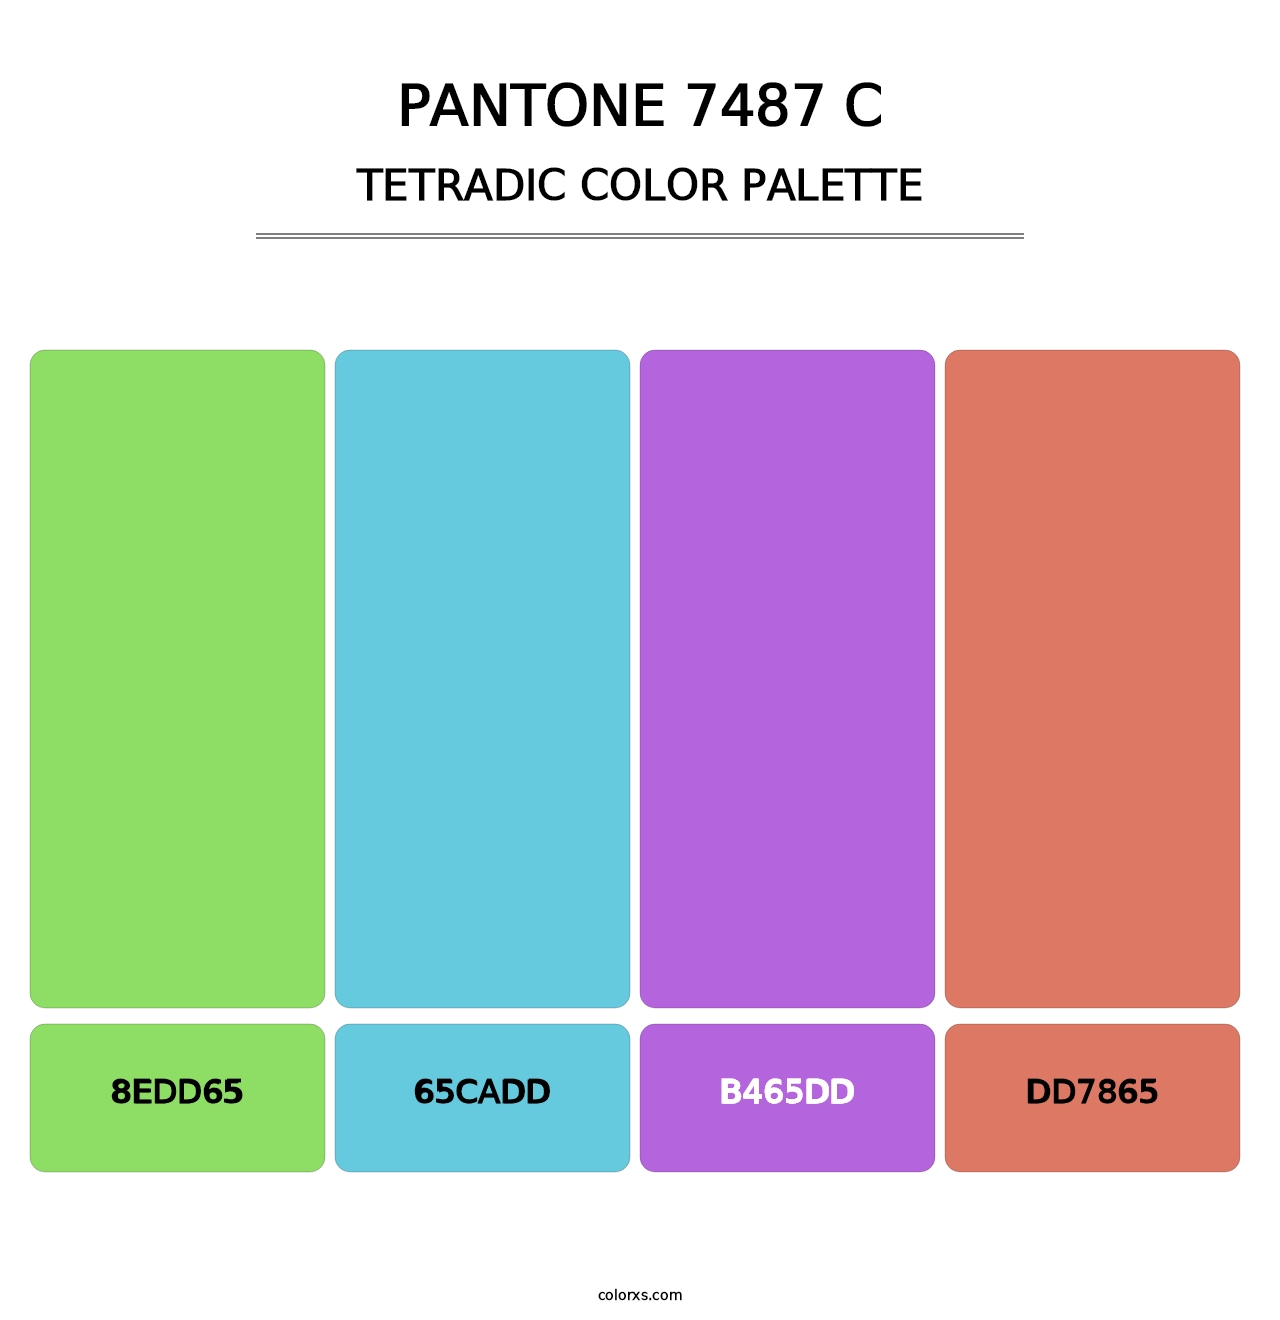 PANTONE 7487 C - Tetradic Color Palette